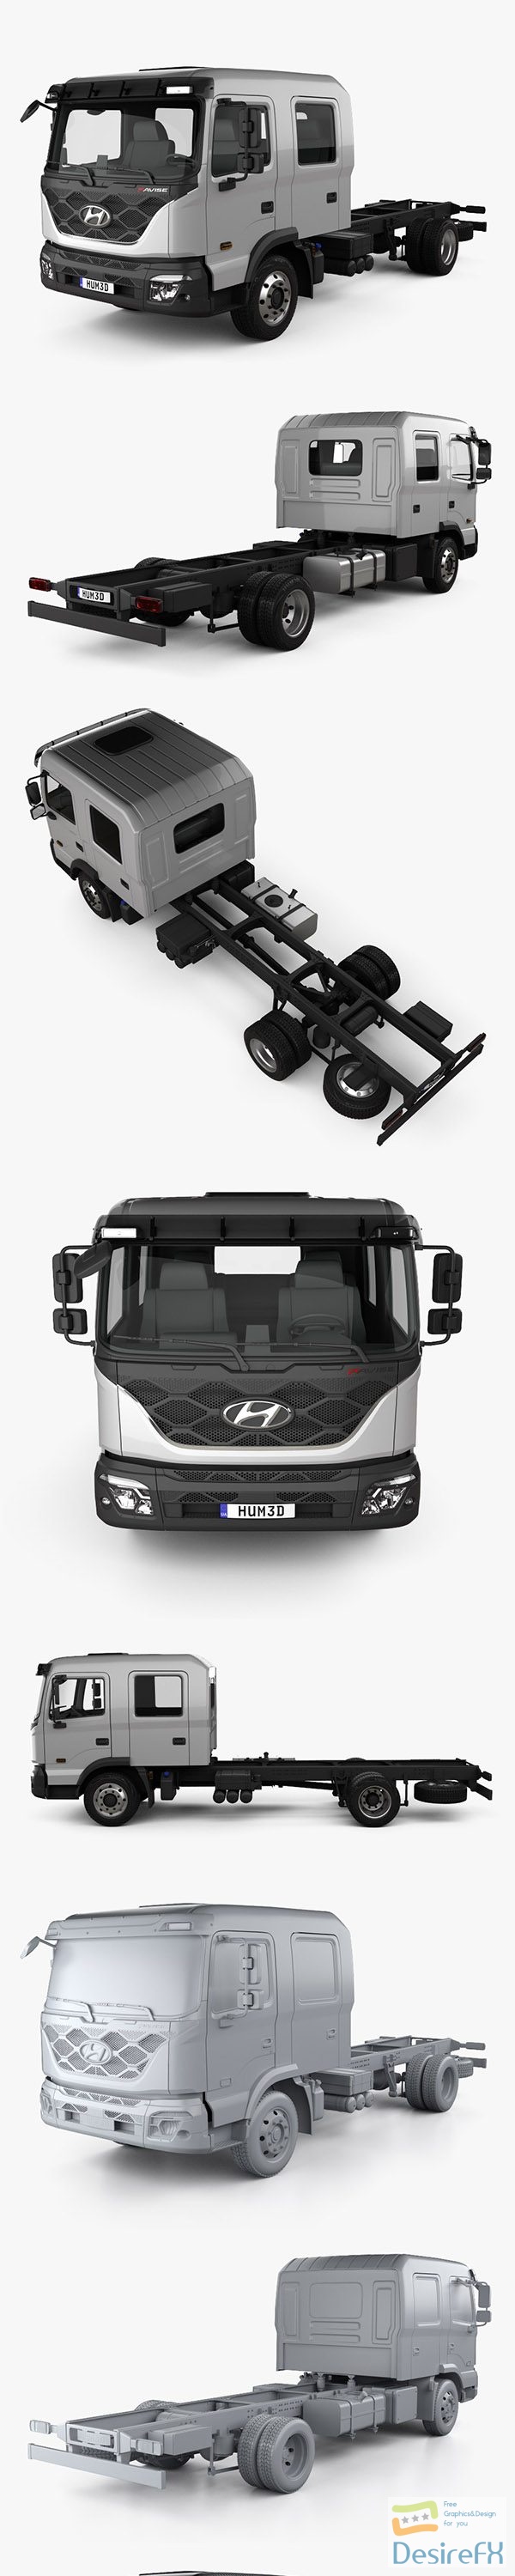 Hyundai Pavise Double Cab Chassis Truck 2019 3D Model